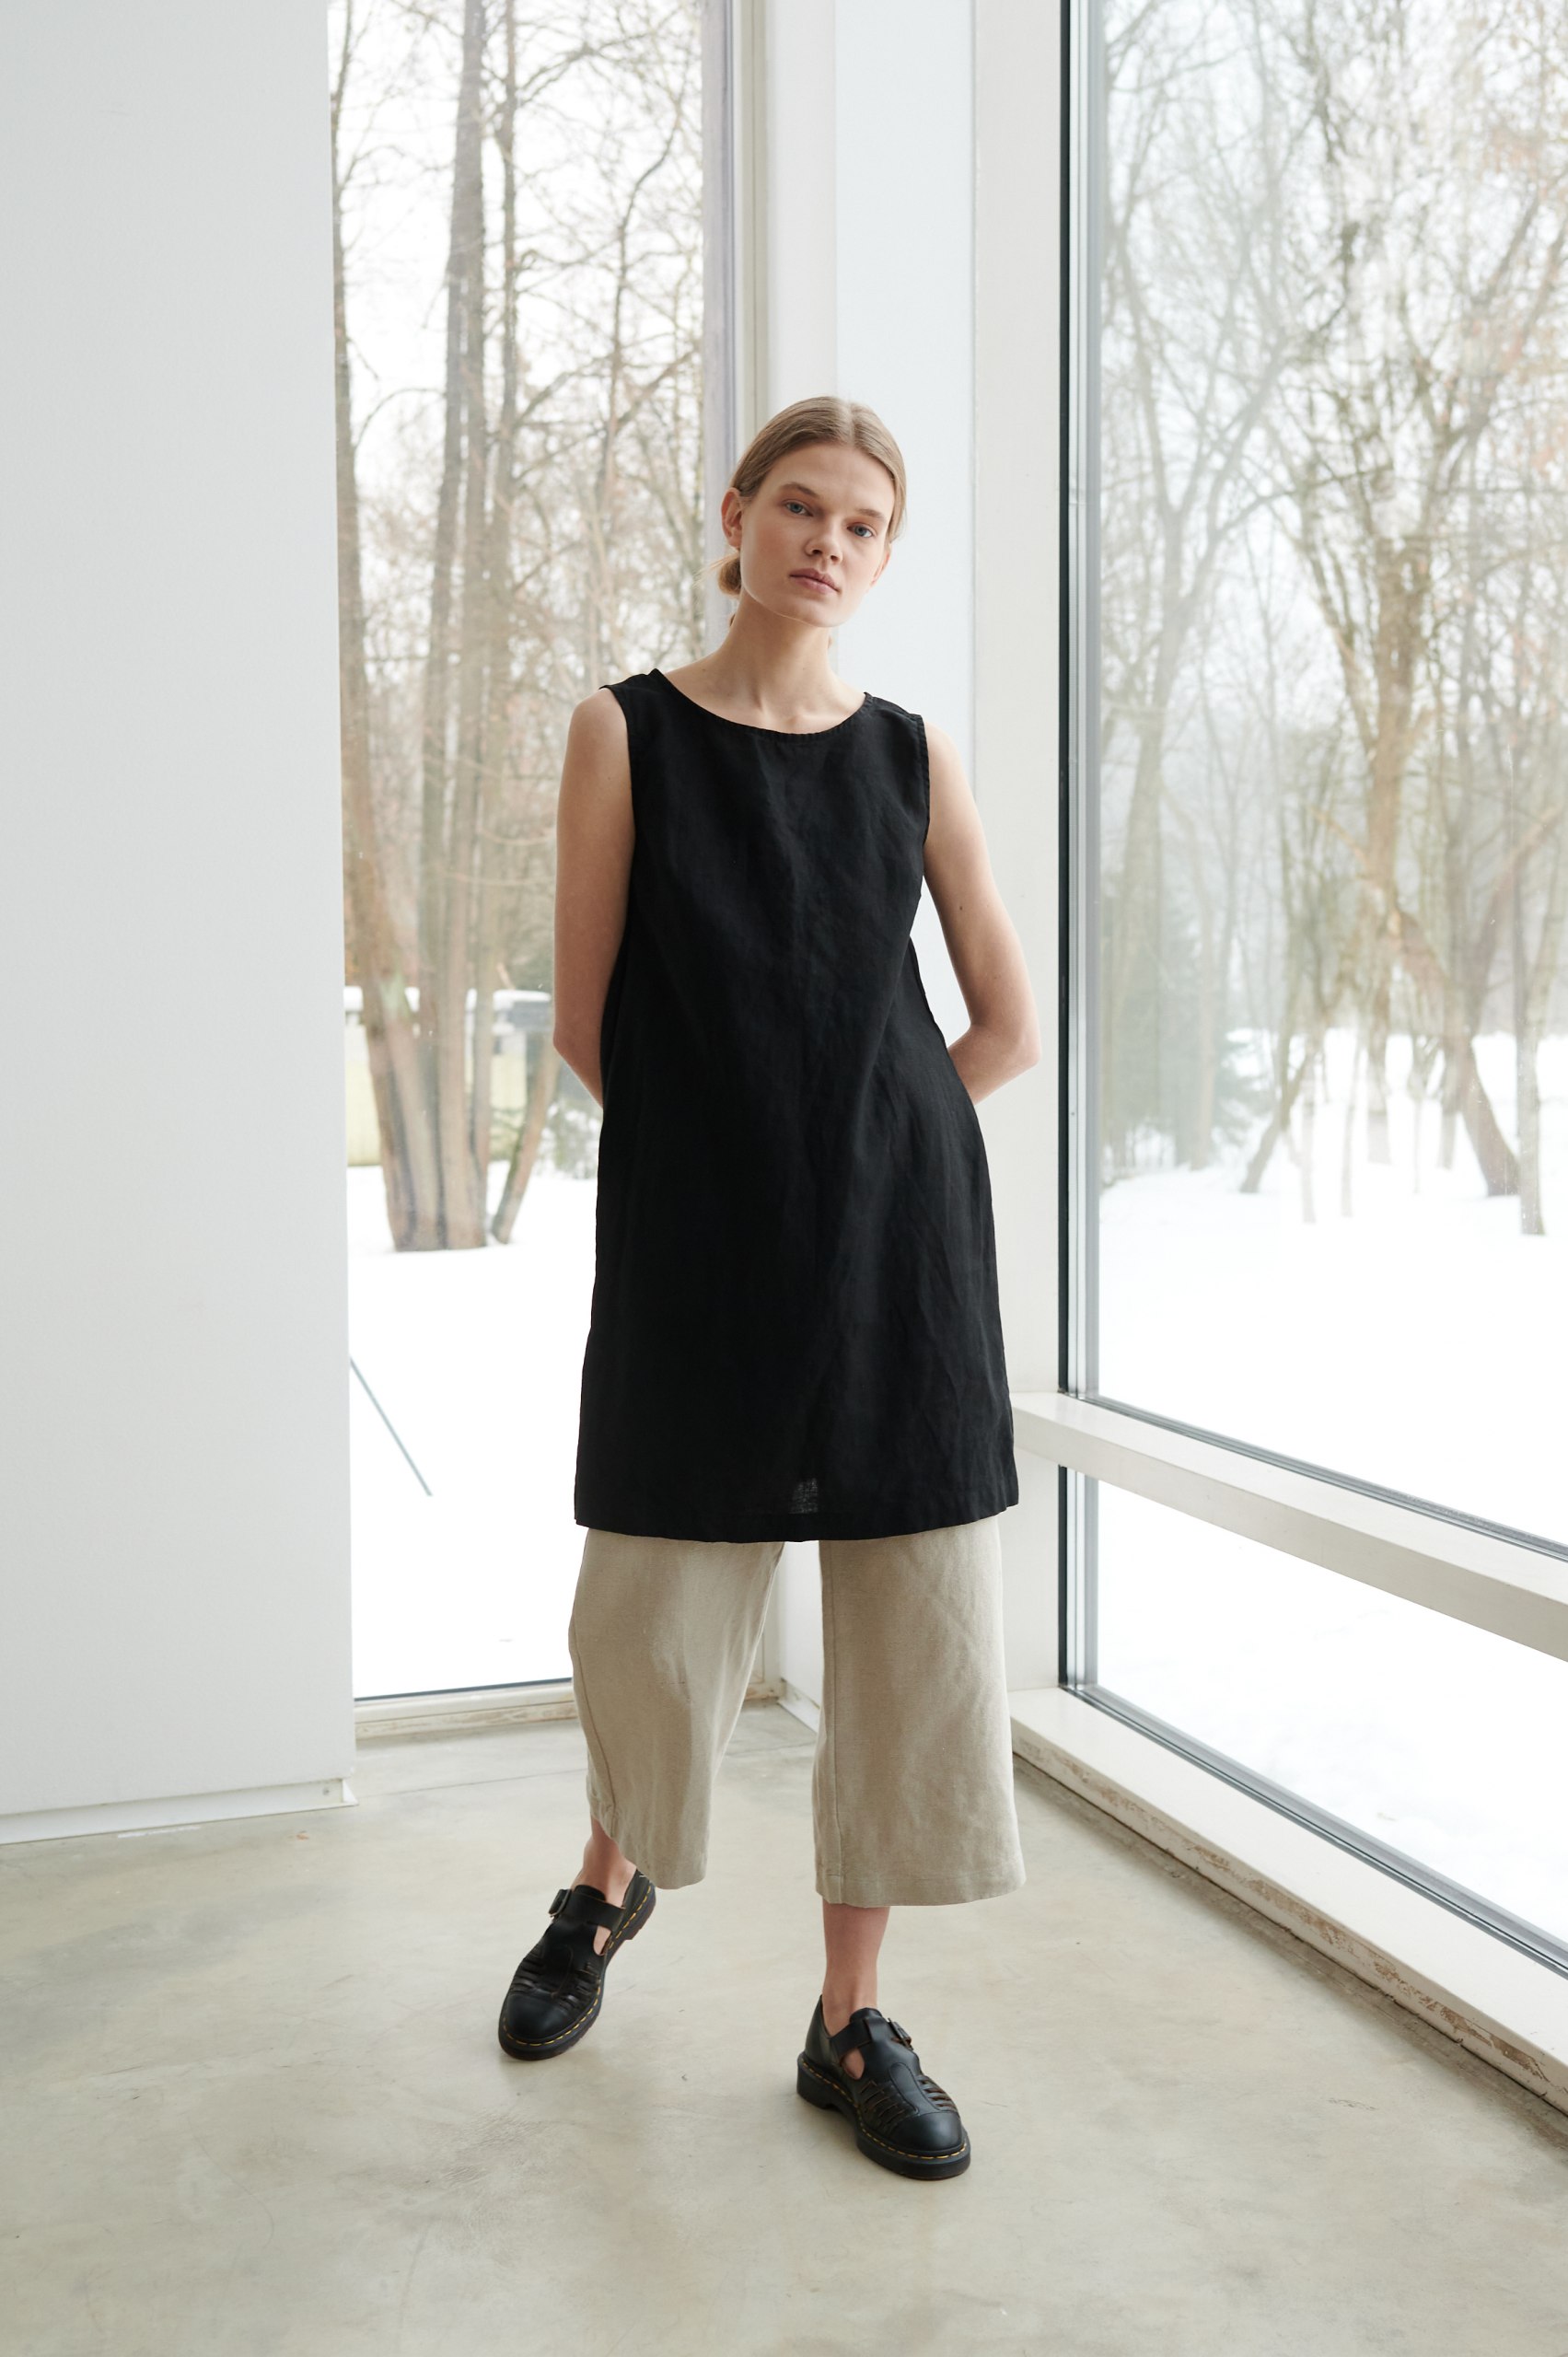 Model wearing sleeveless black linen dress